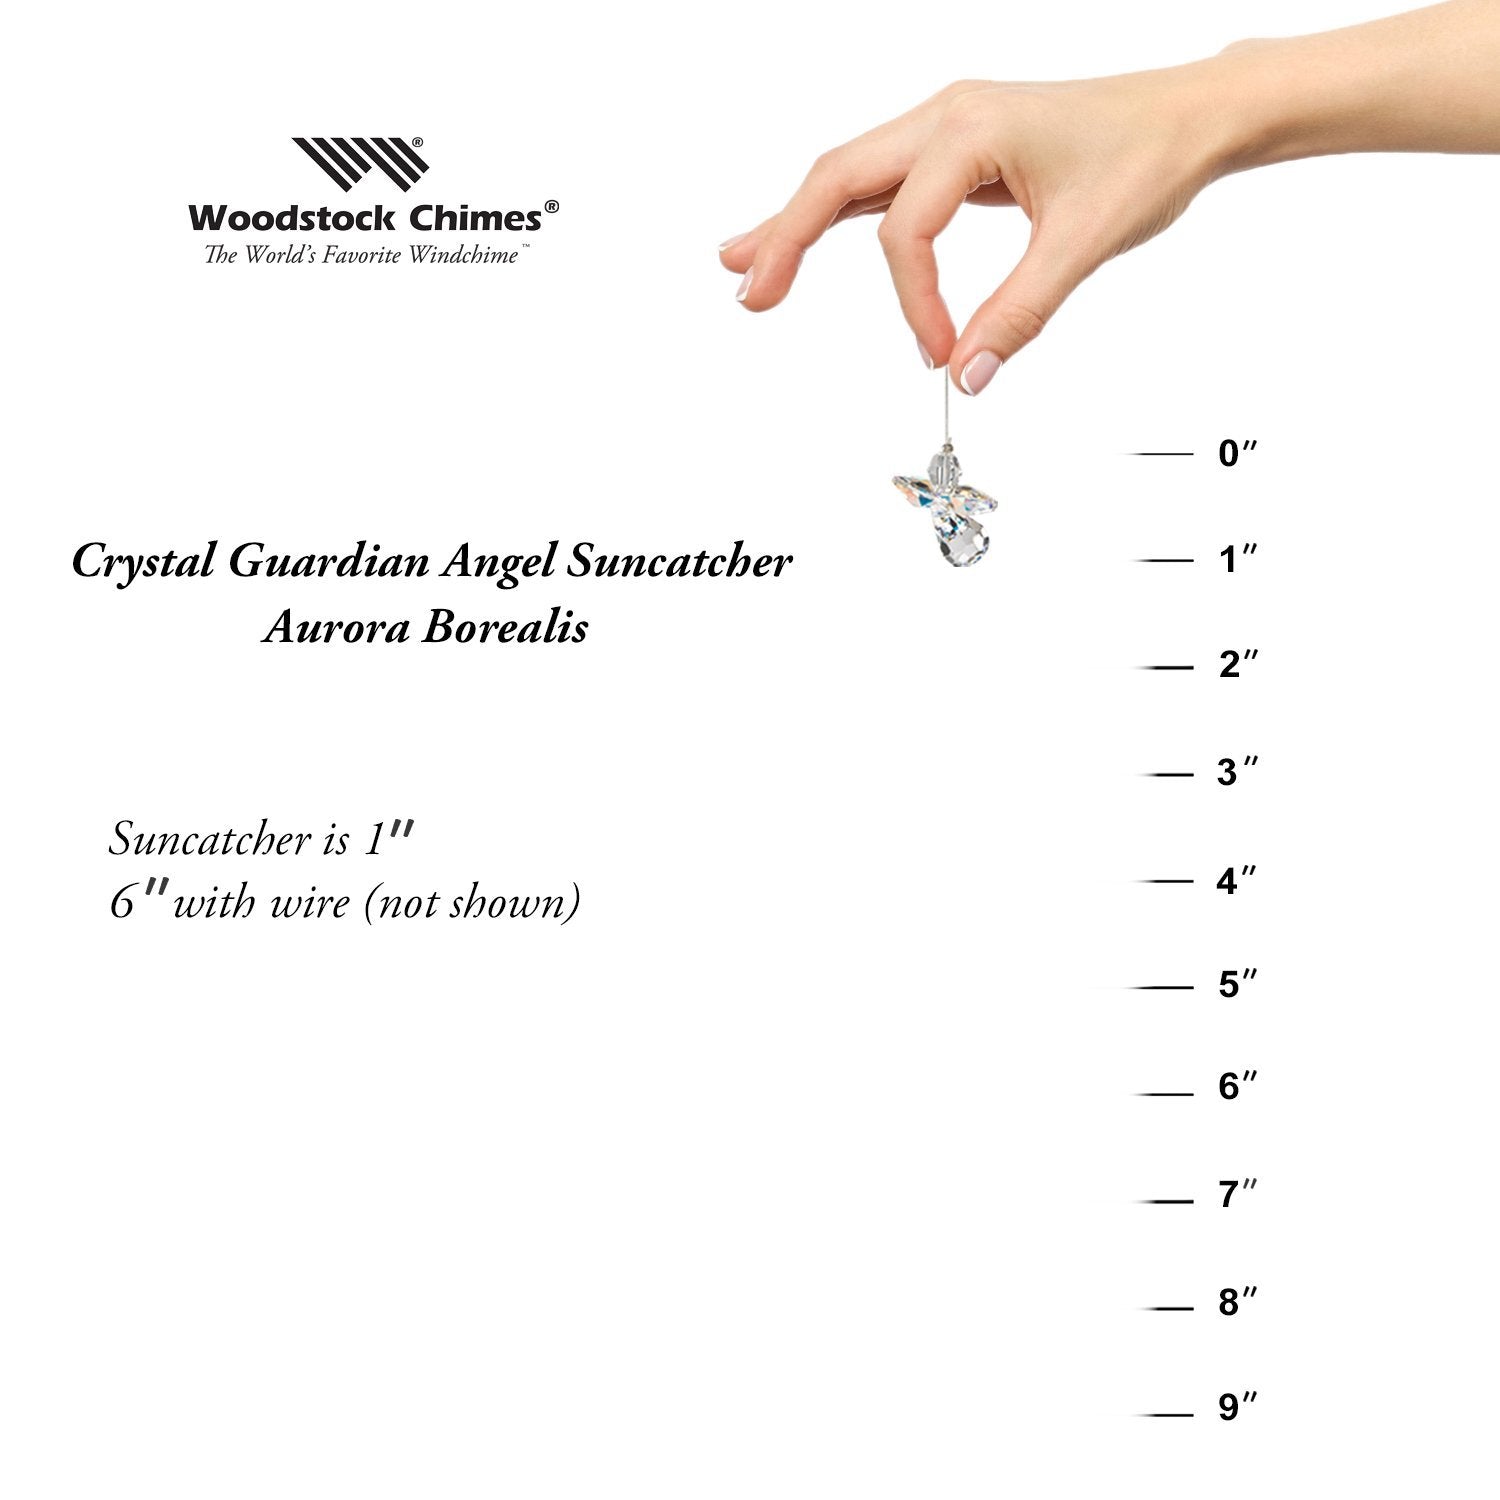 Crystal Guardian Angel Suncatcher - Aurora Borealis (January) proportion image